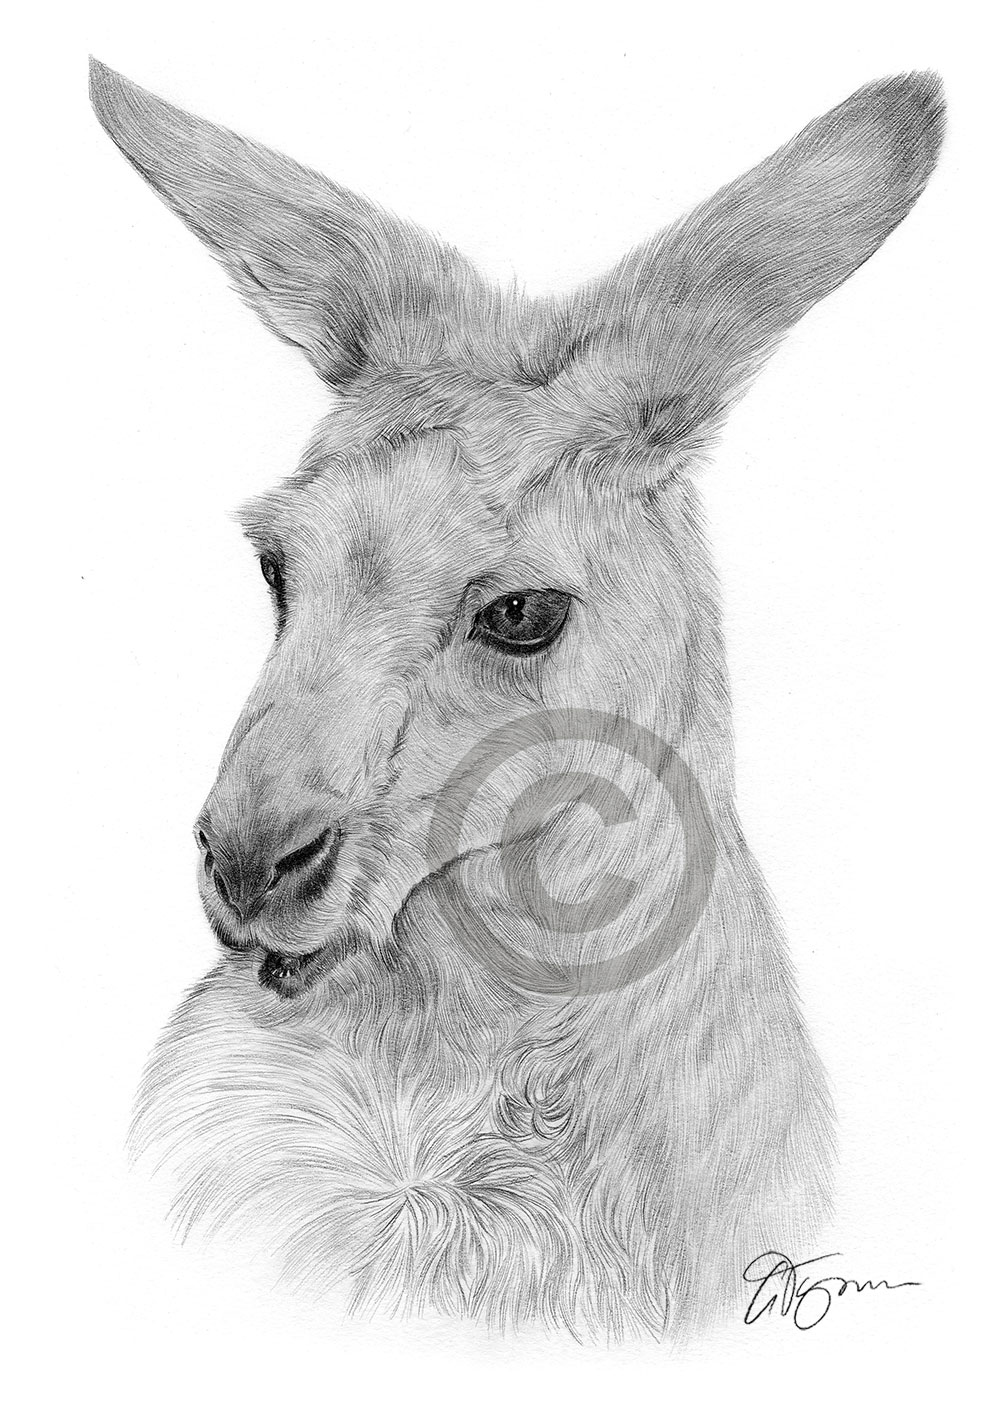 Pencil drawing of a kangaroo by UK artist Gary Tymon